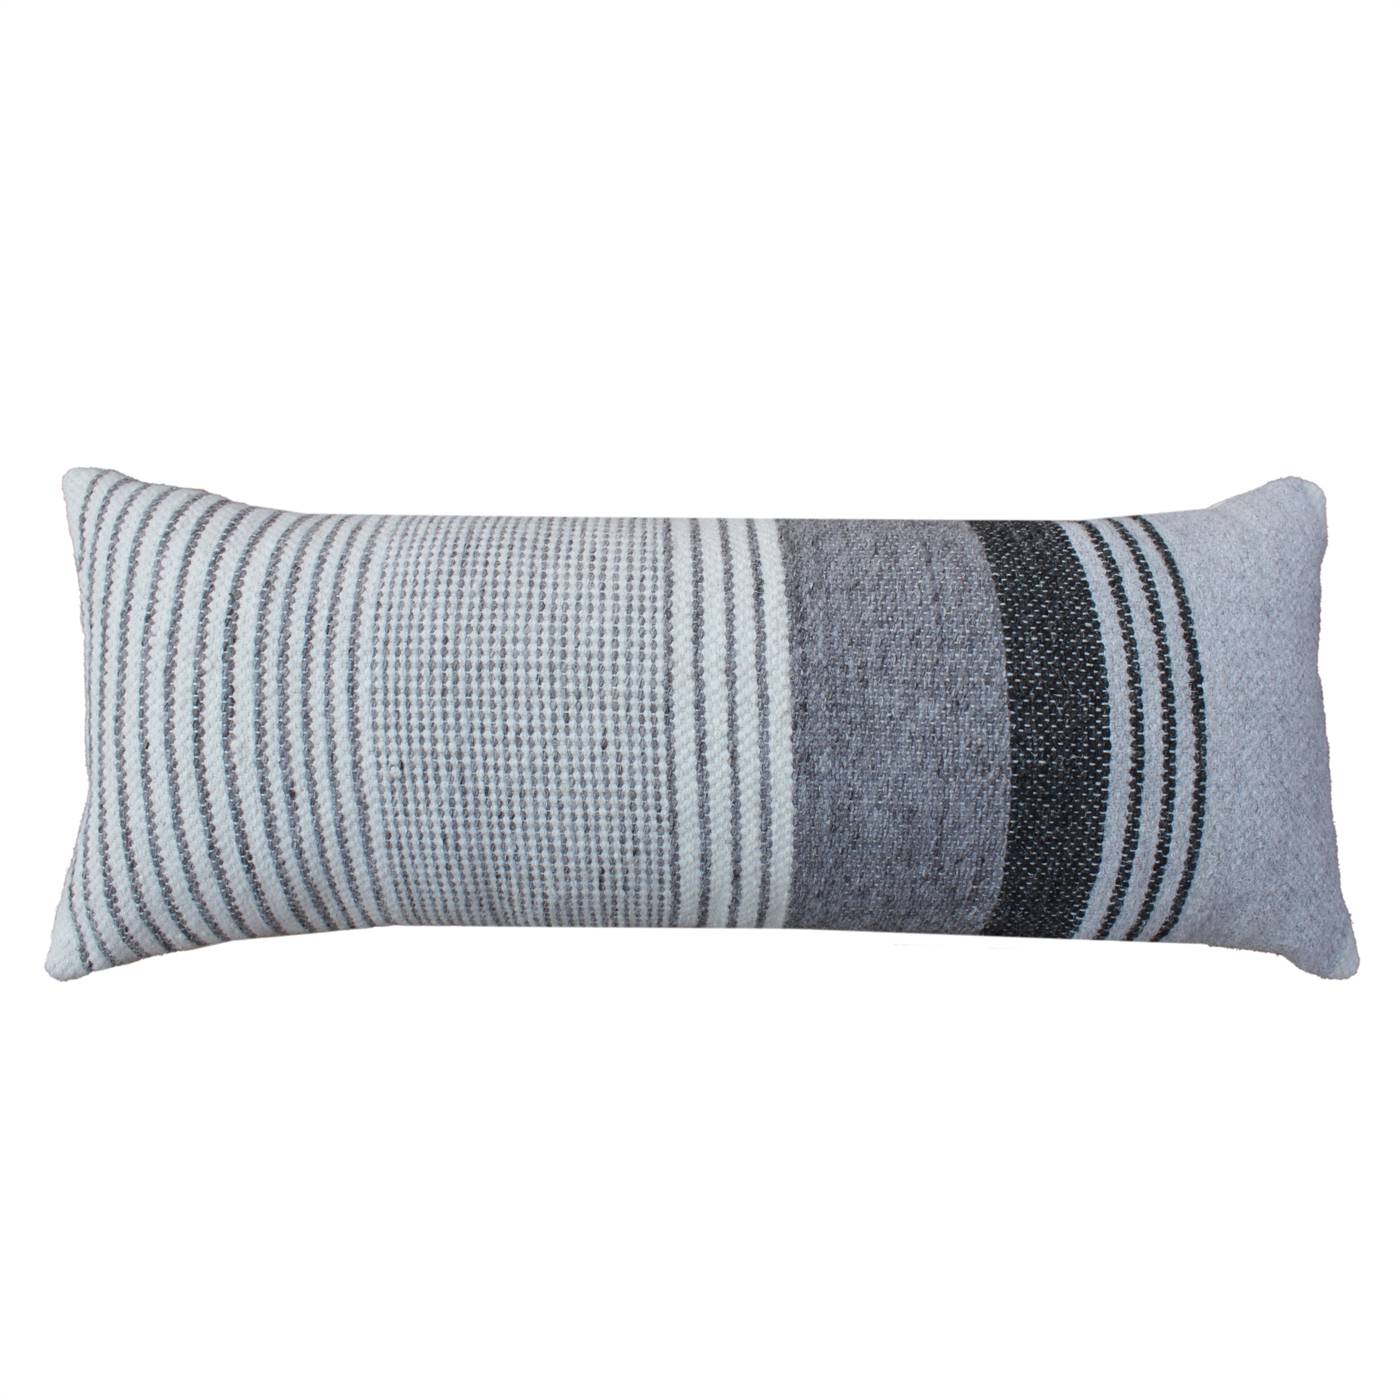 Palomo Lumber Cushion, 36x91 cm, Natural White, Grey, Charcoal, Wool, PET, Hand Woven, Pitloom, Flat Weave